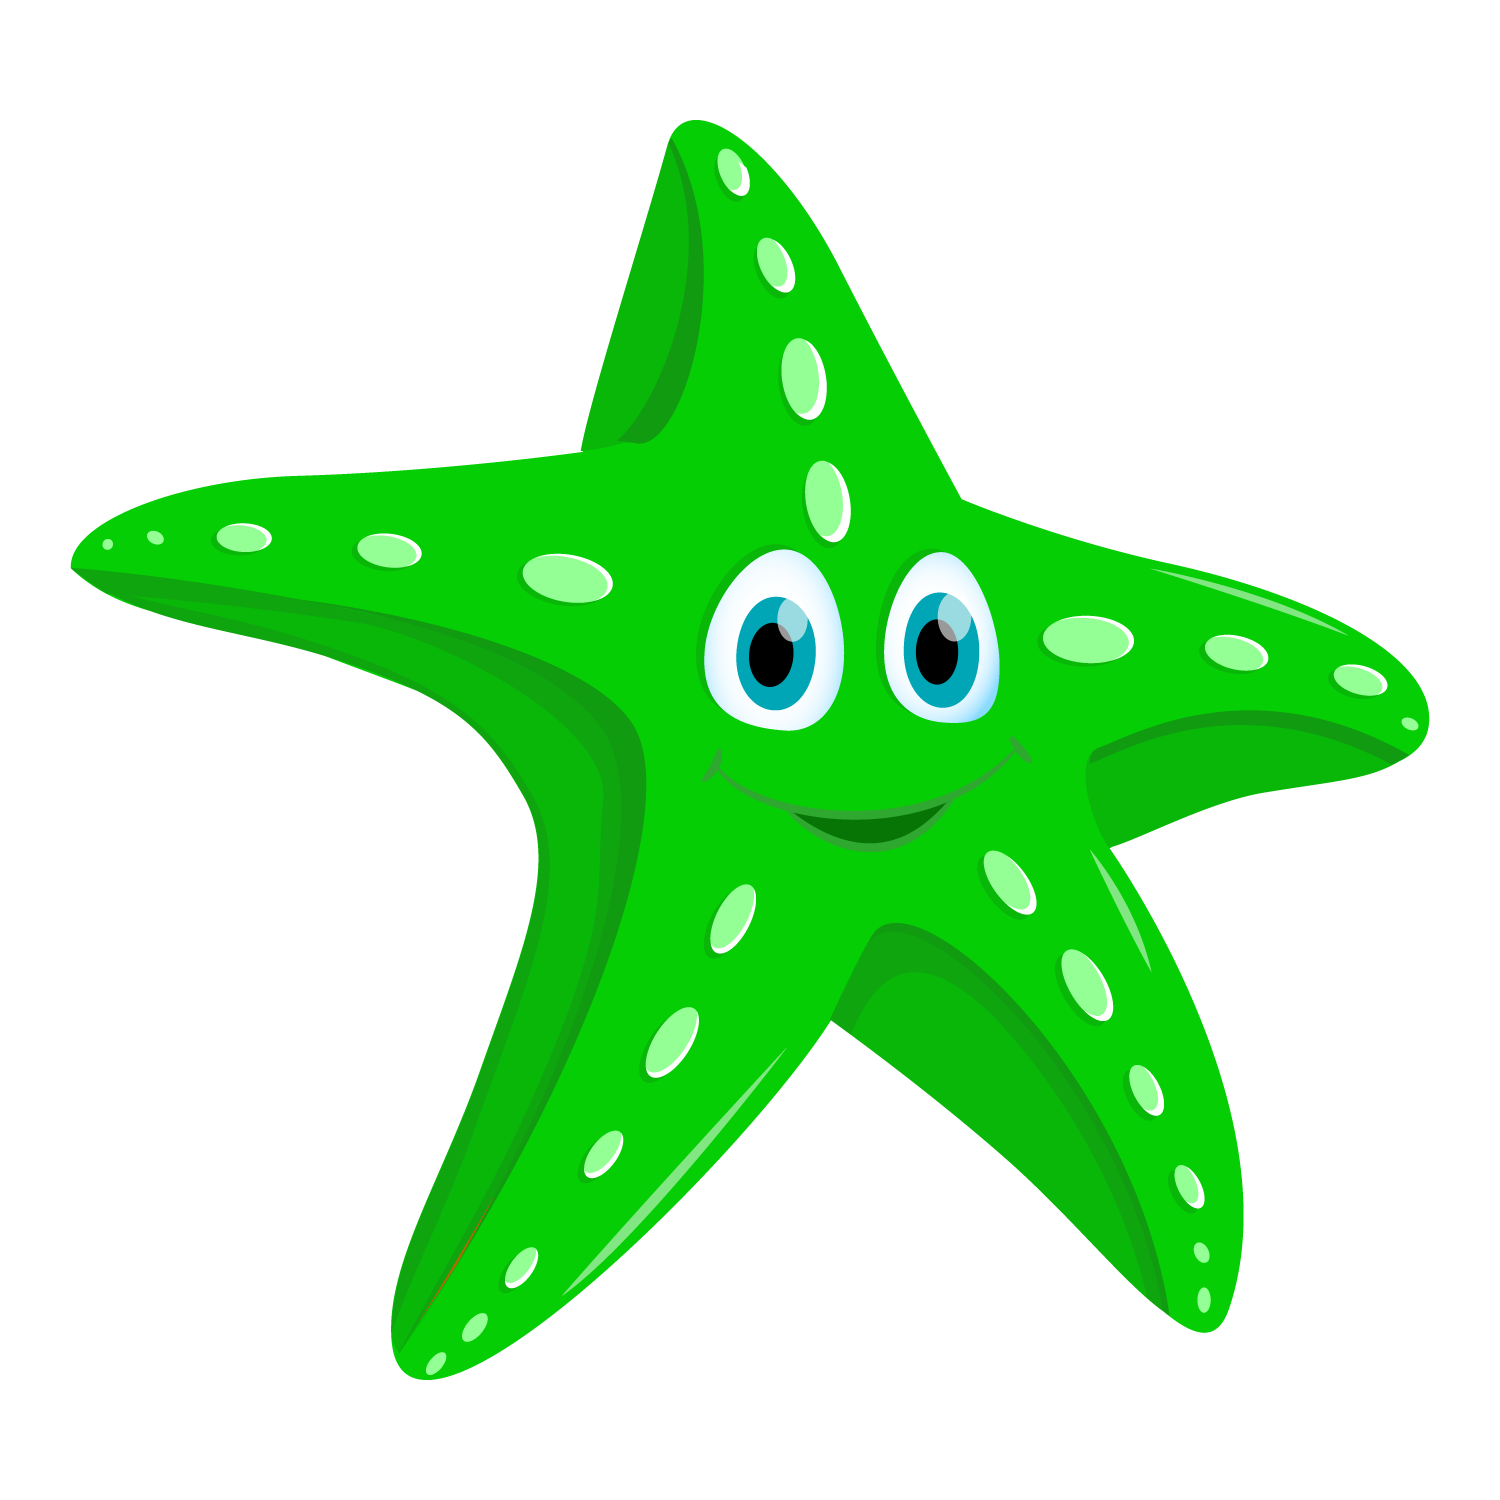 Green clipart starfish, Green starfish Transparent FREE for.